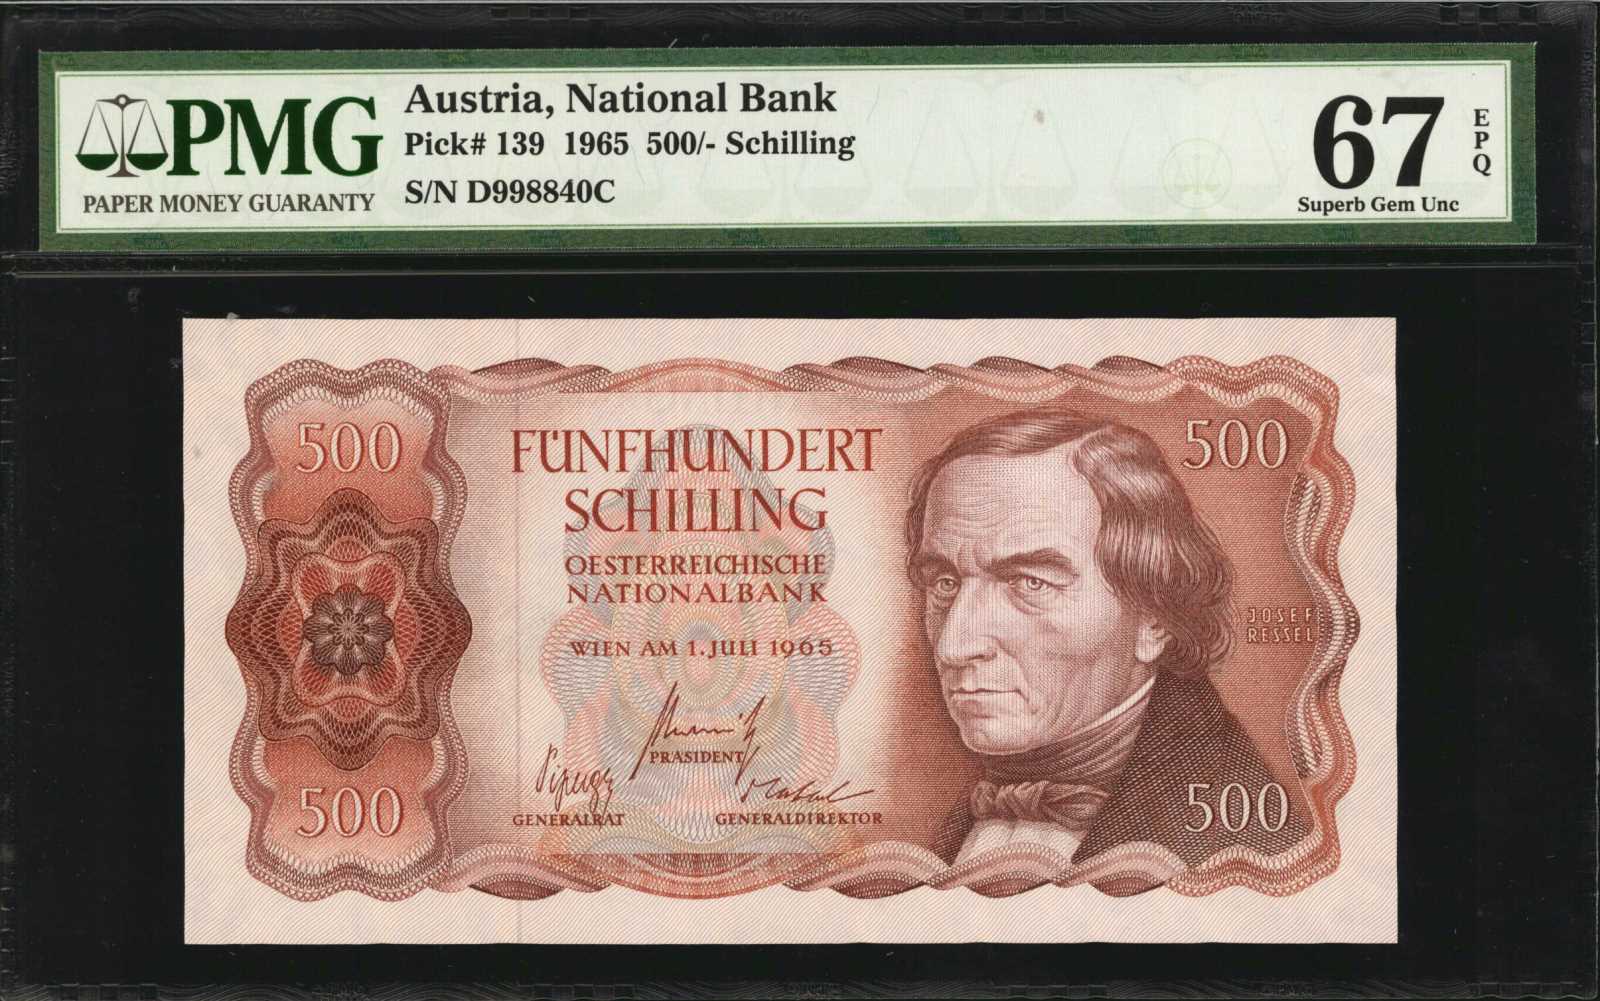 Banking 500. Austria 500 Schilling. Австрийский шиллинг. Австрия в 1965 году. Exclusive Banknotes.